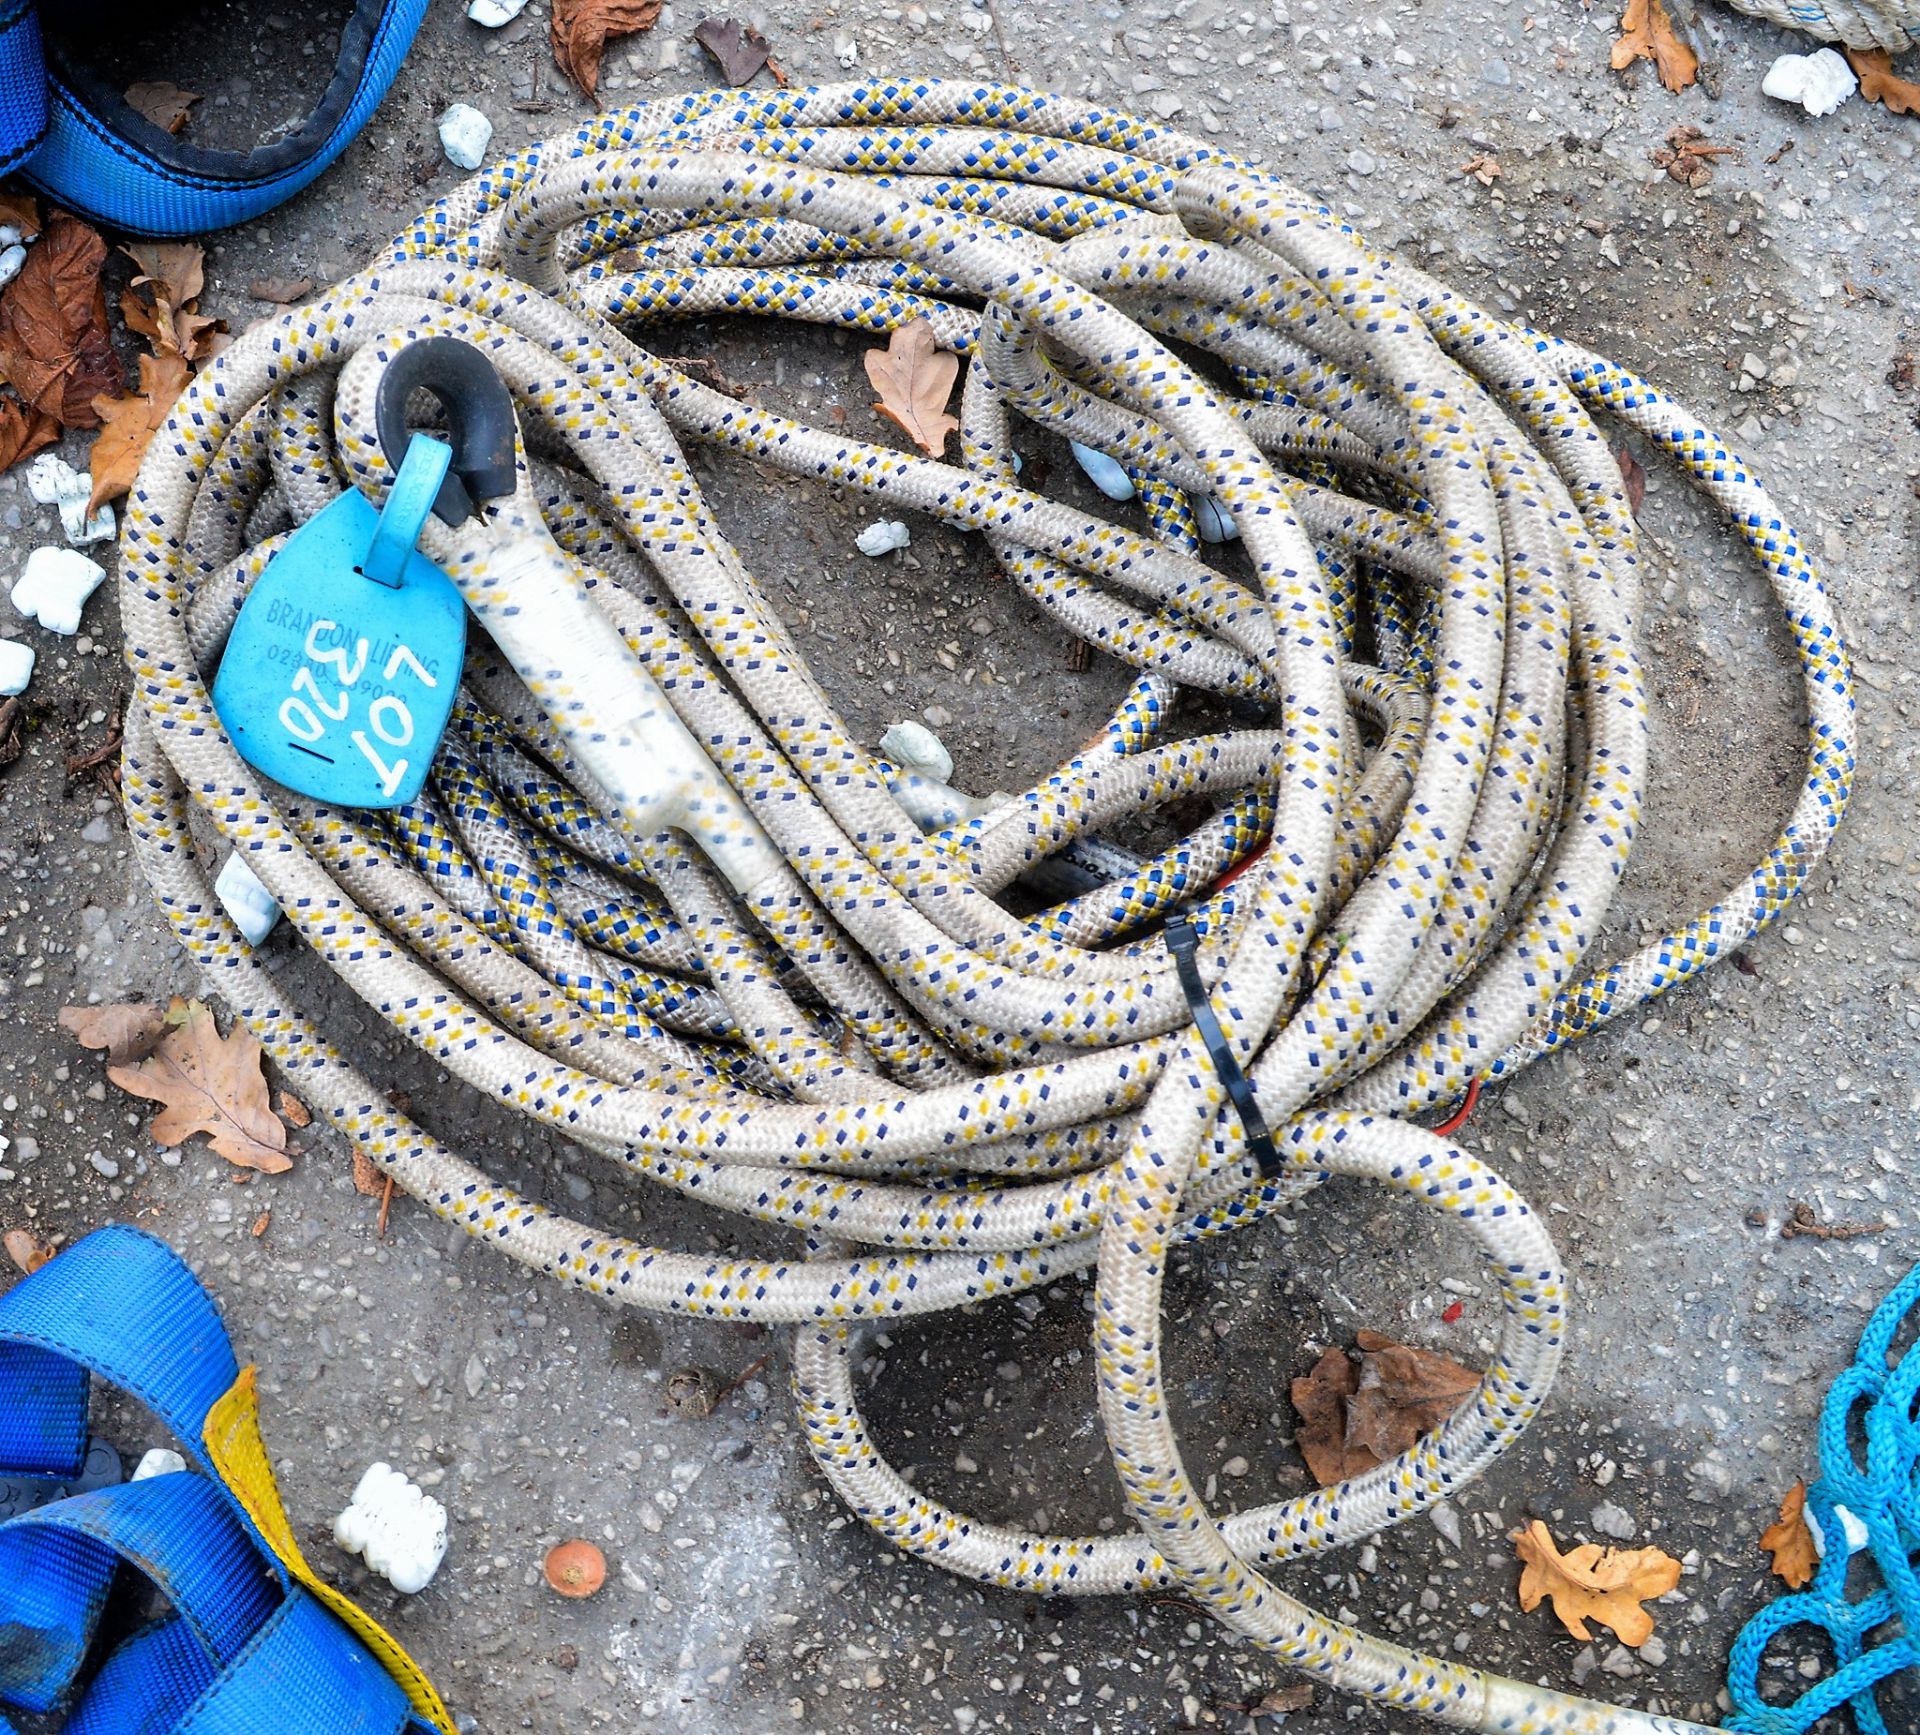 2 - 10 metre fall arrest ropes